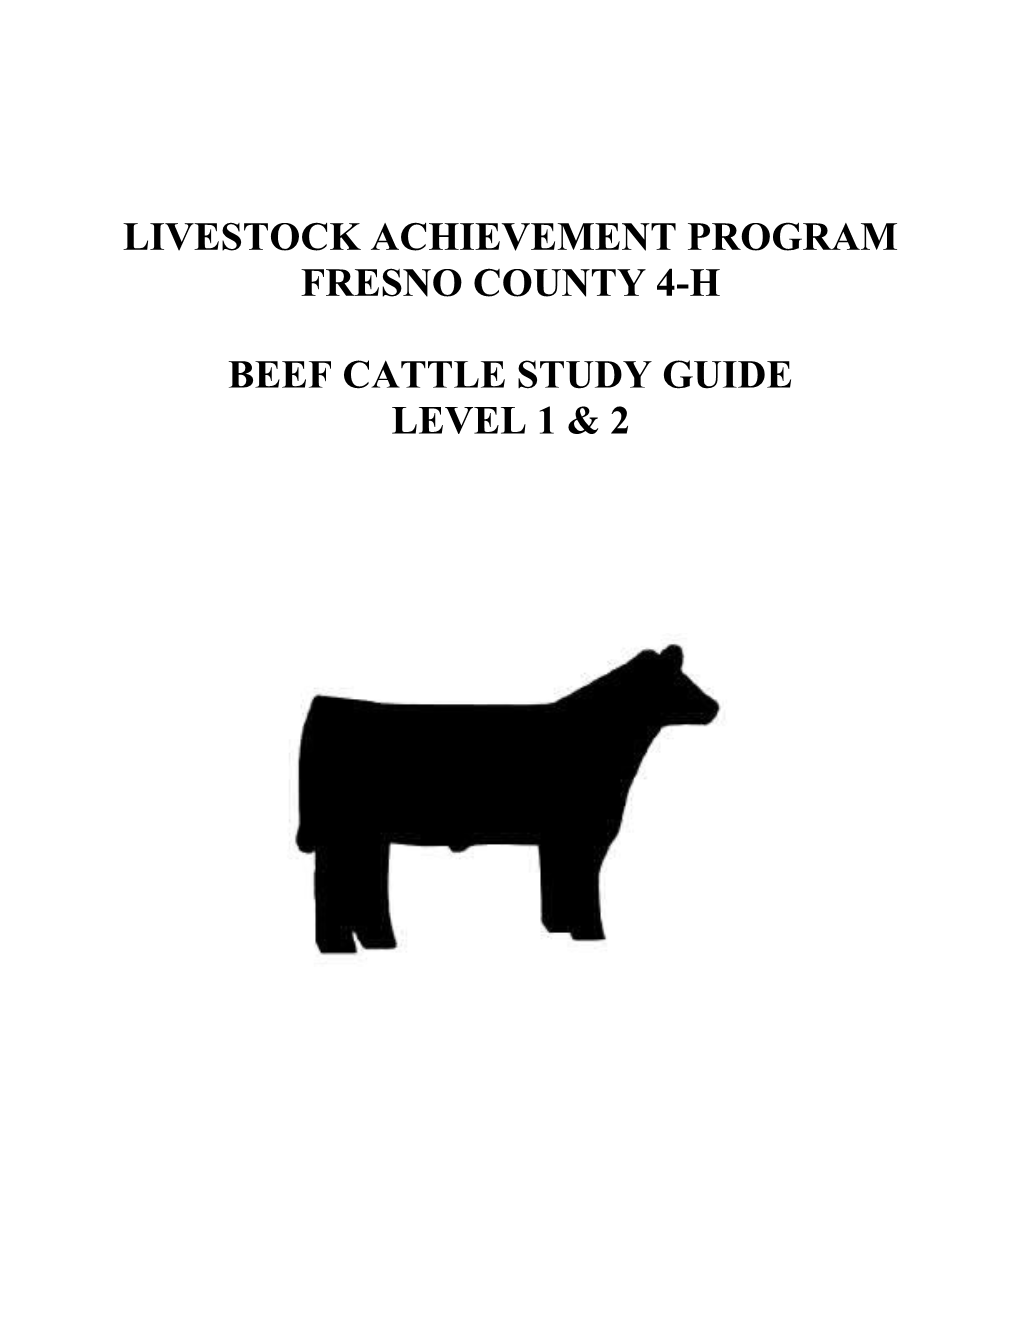 Livestock Achievement Program